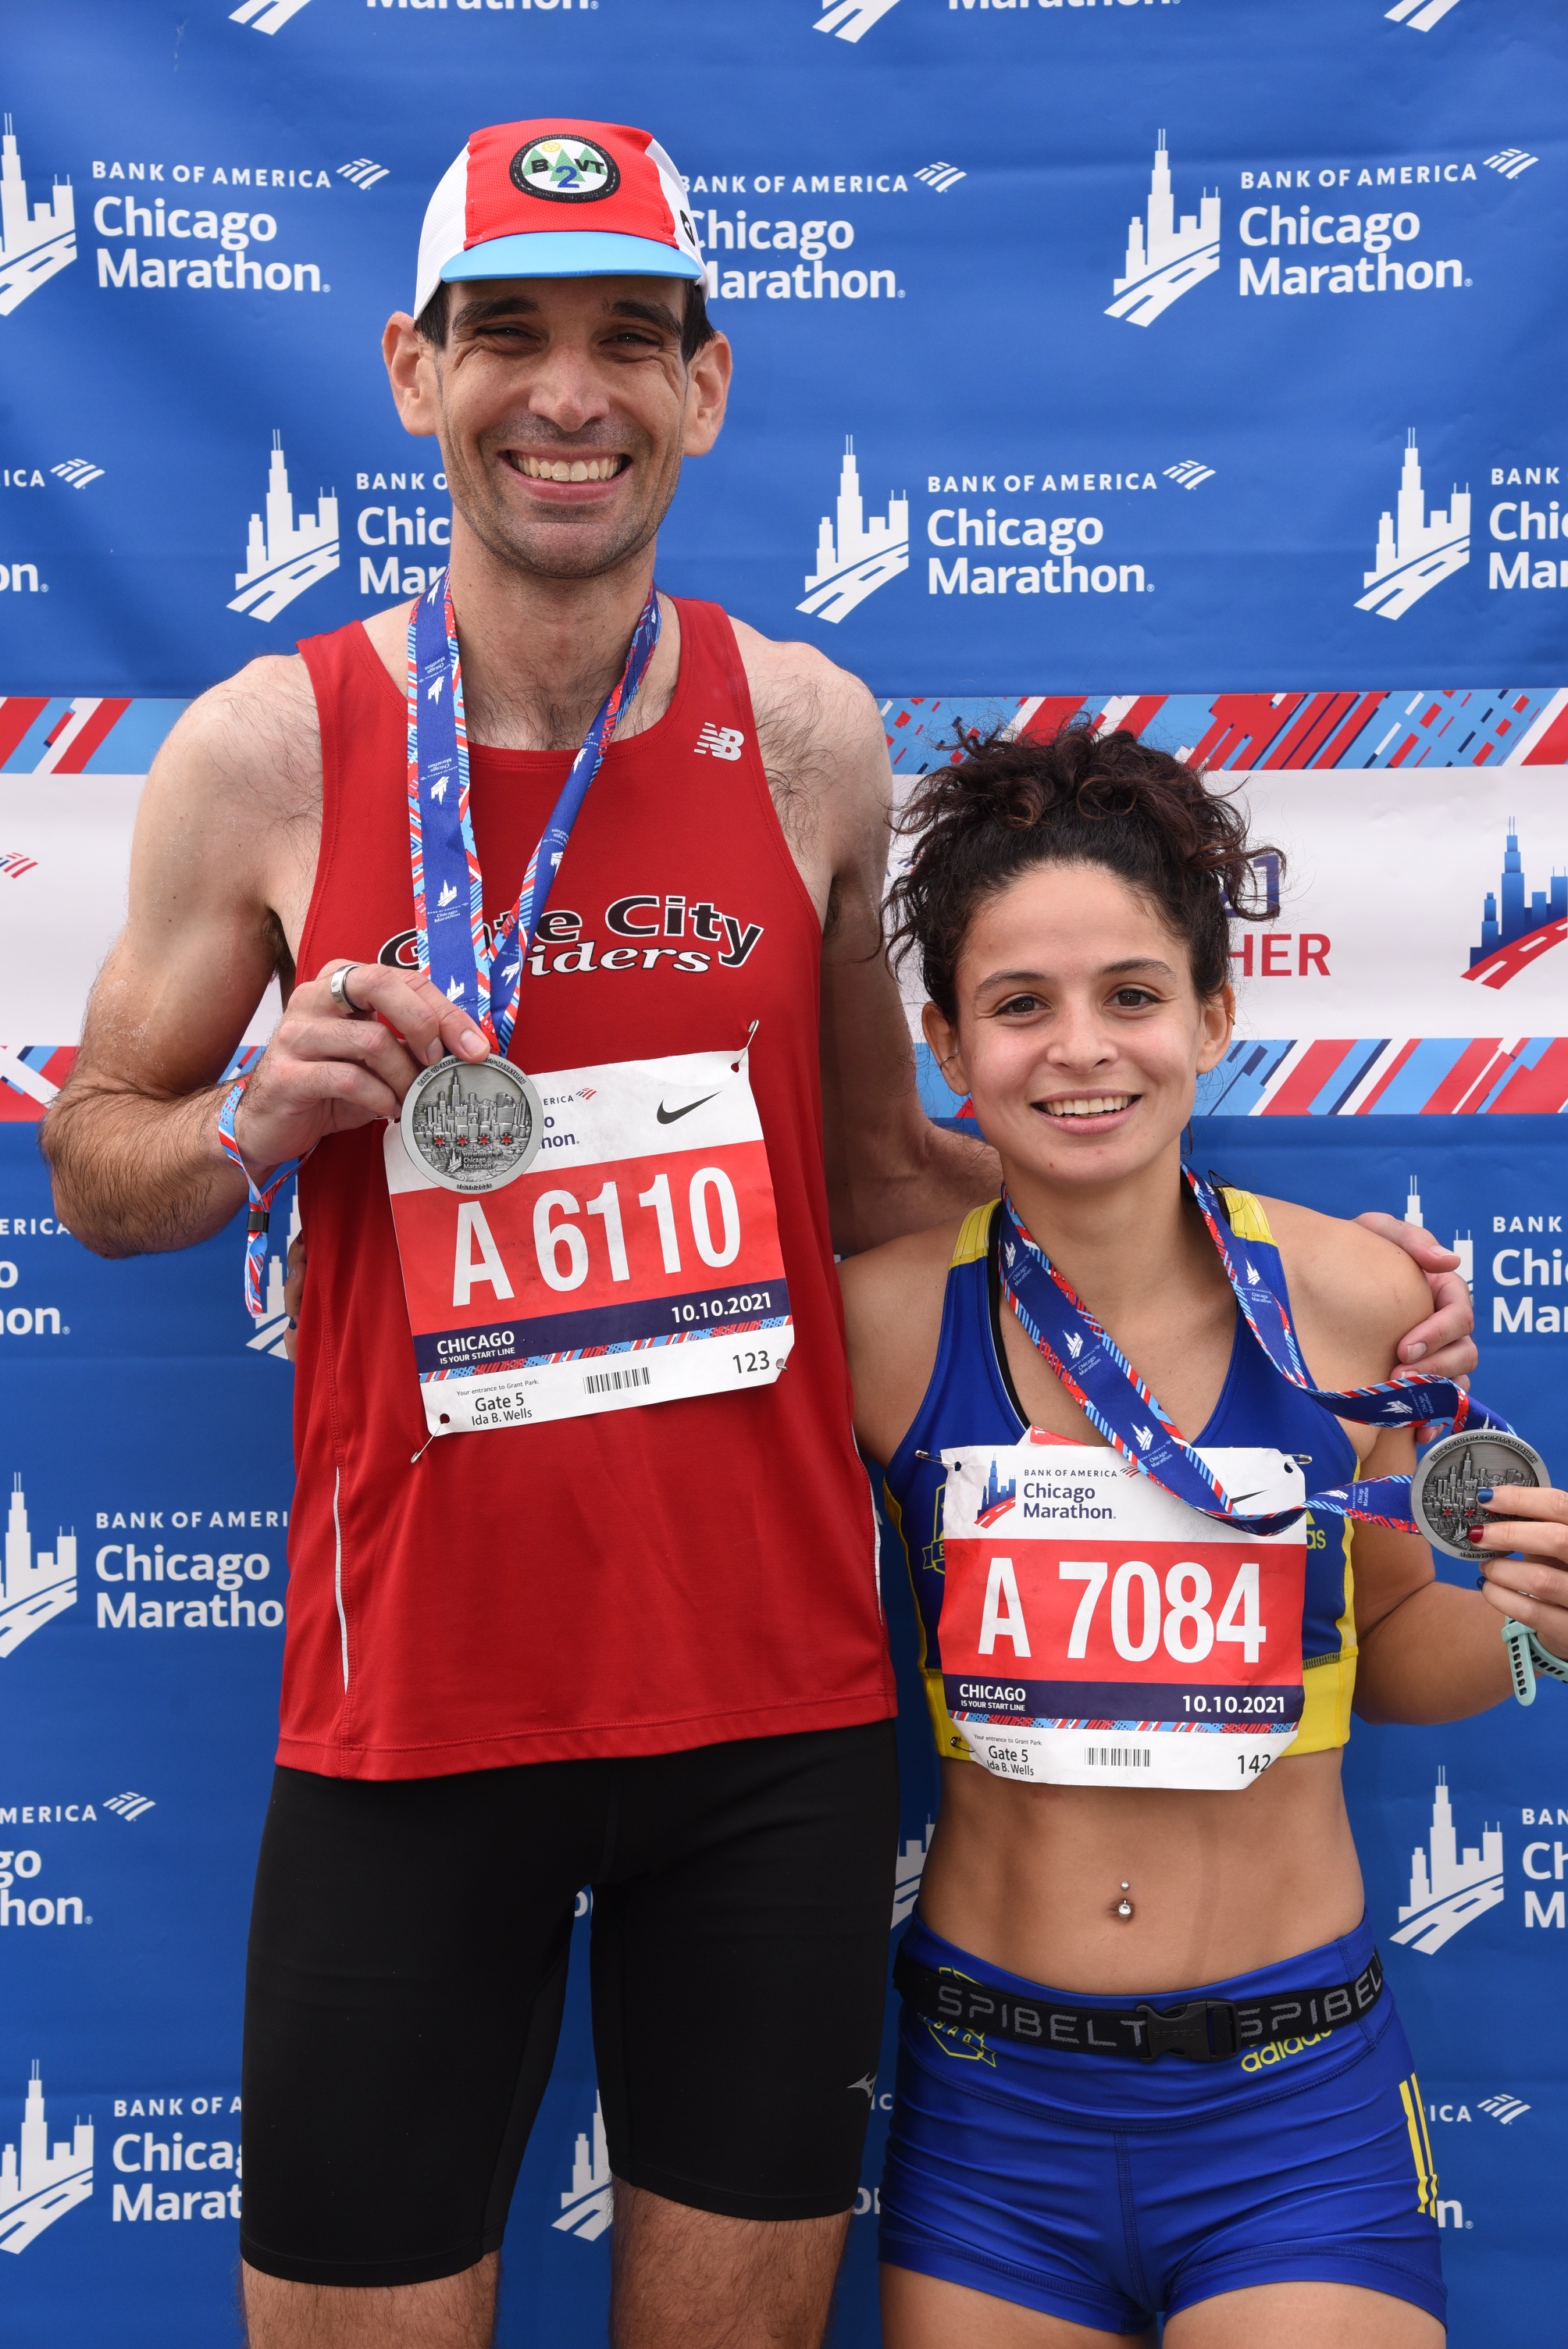 Courtney with Mark Furler after the Chicago Marathon, 2021